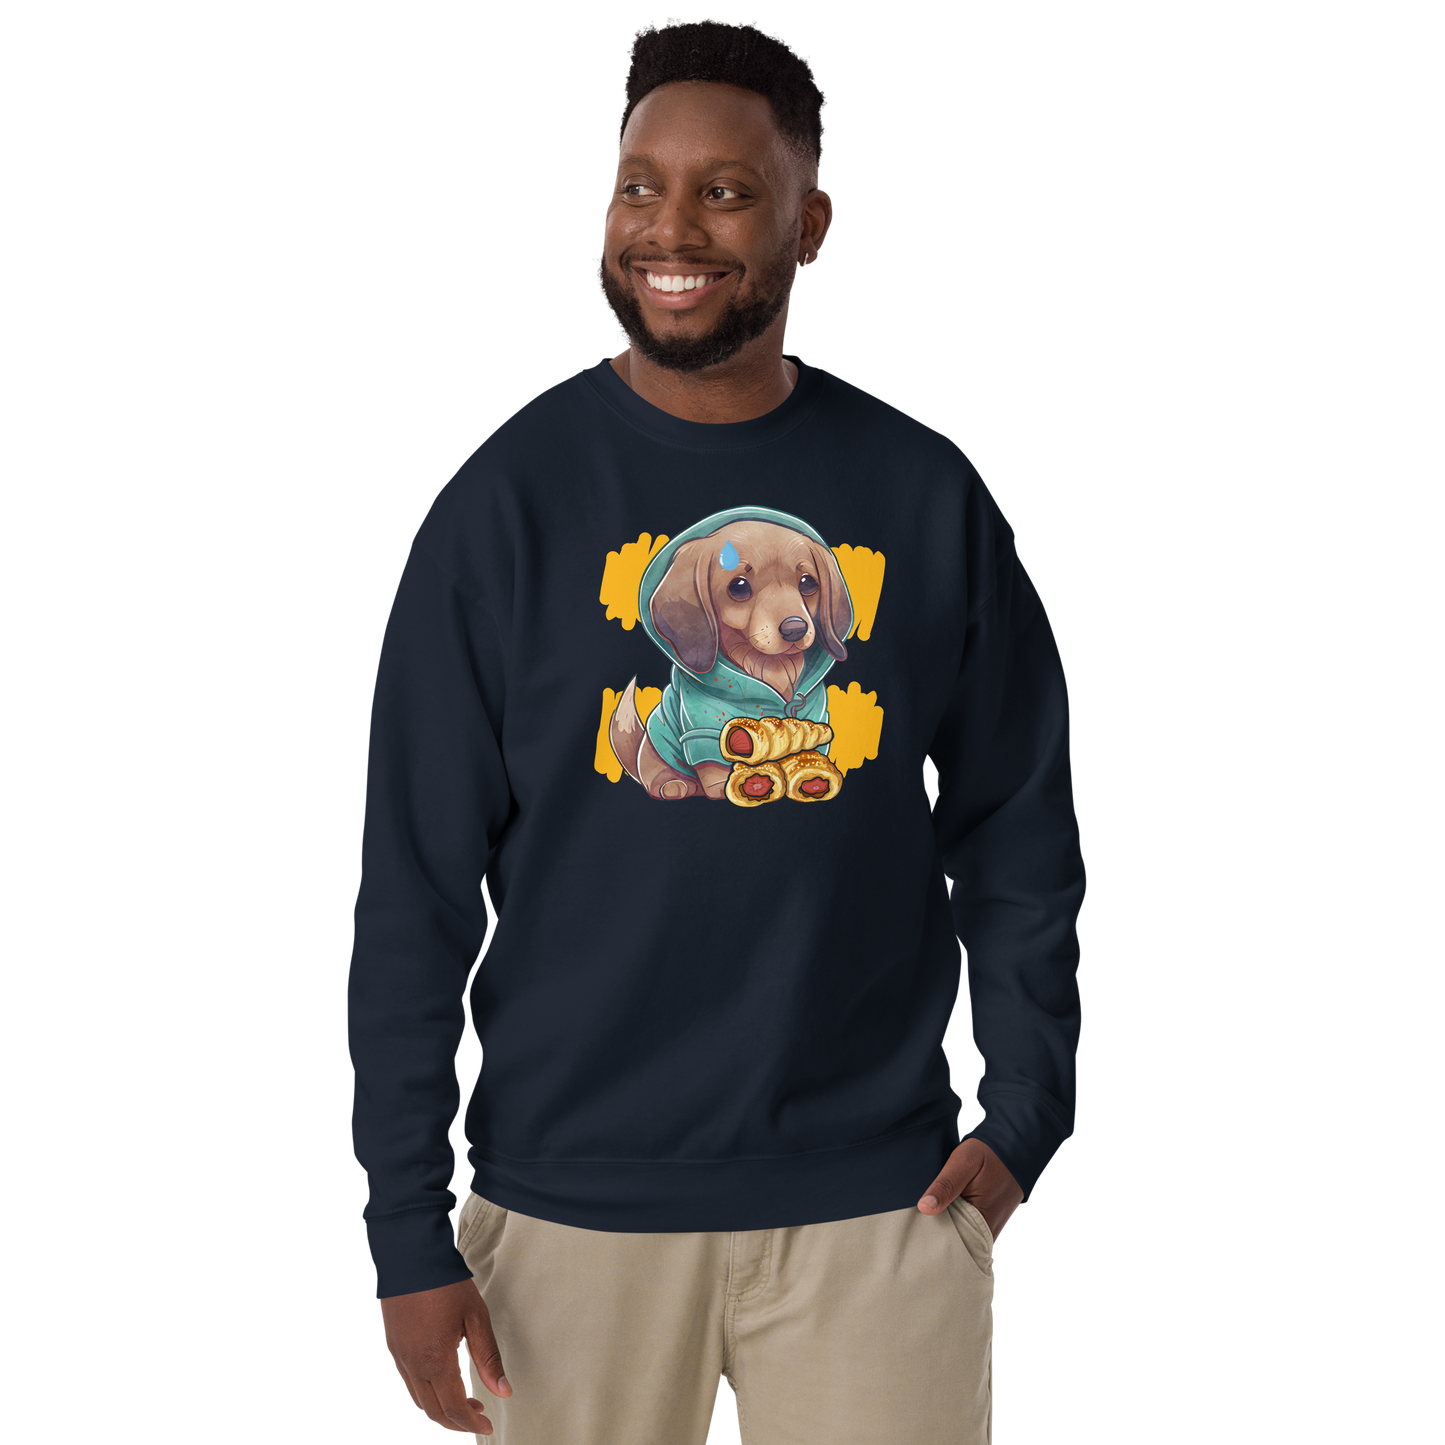 Smiling Man Wearing a Navy Blazer Premium Sausage Dog Sweatshirt featuring an adorable Sausage Roll Dachshund graphic on the chest - Funny Dachshund Graphic Sweatshirts - Boozy Fox